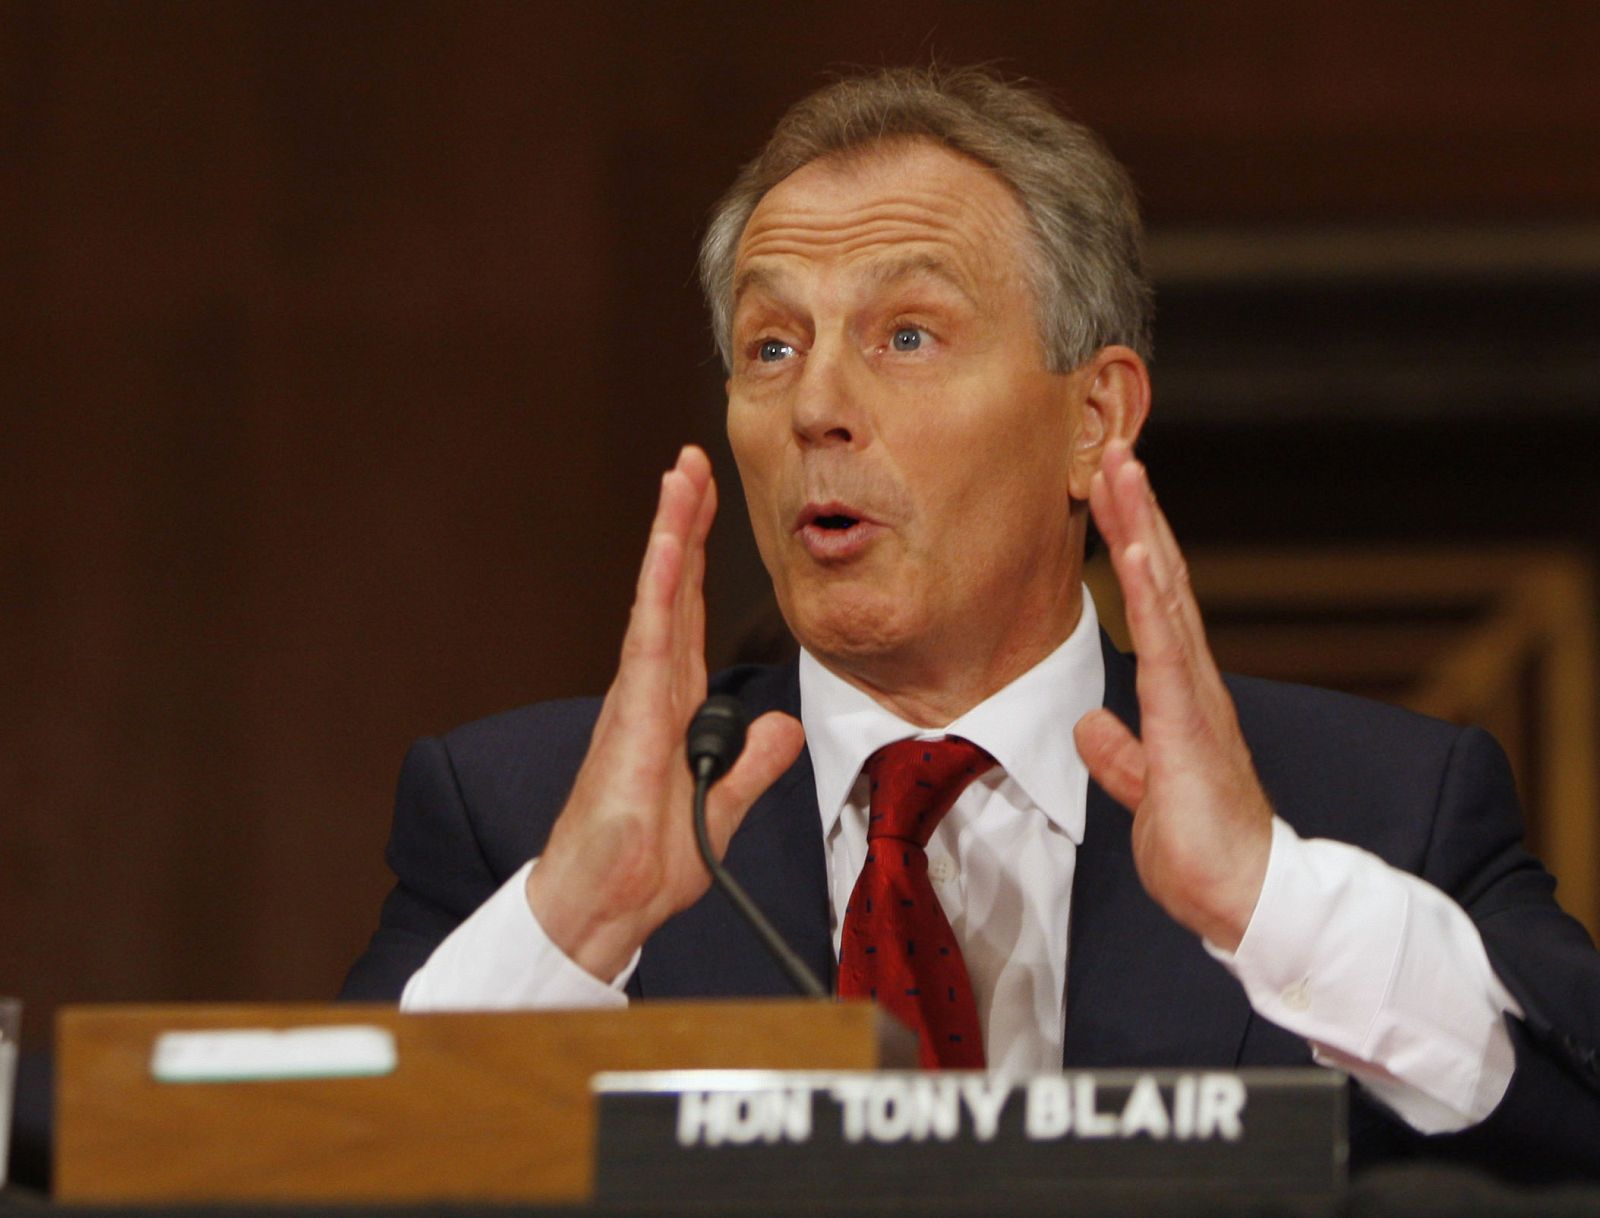 Tony Blair testifies at a U.S. Senate Hearing on Middle East peace in Washington